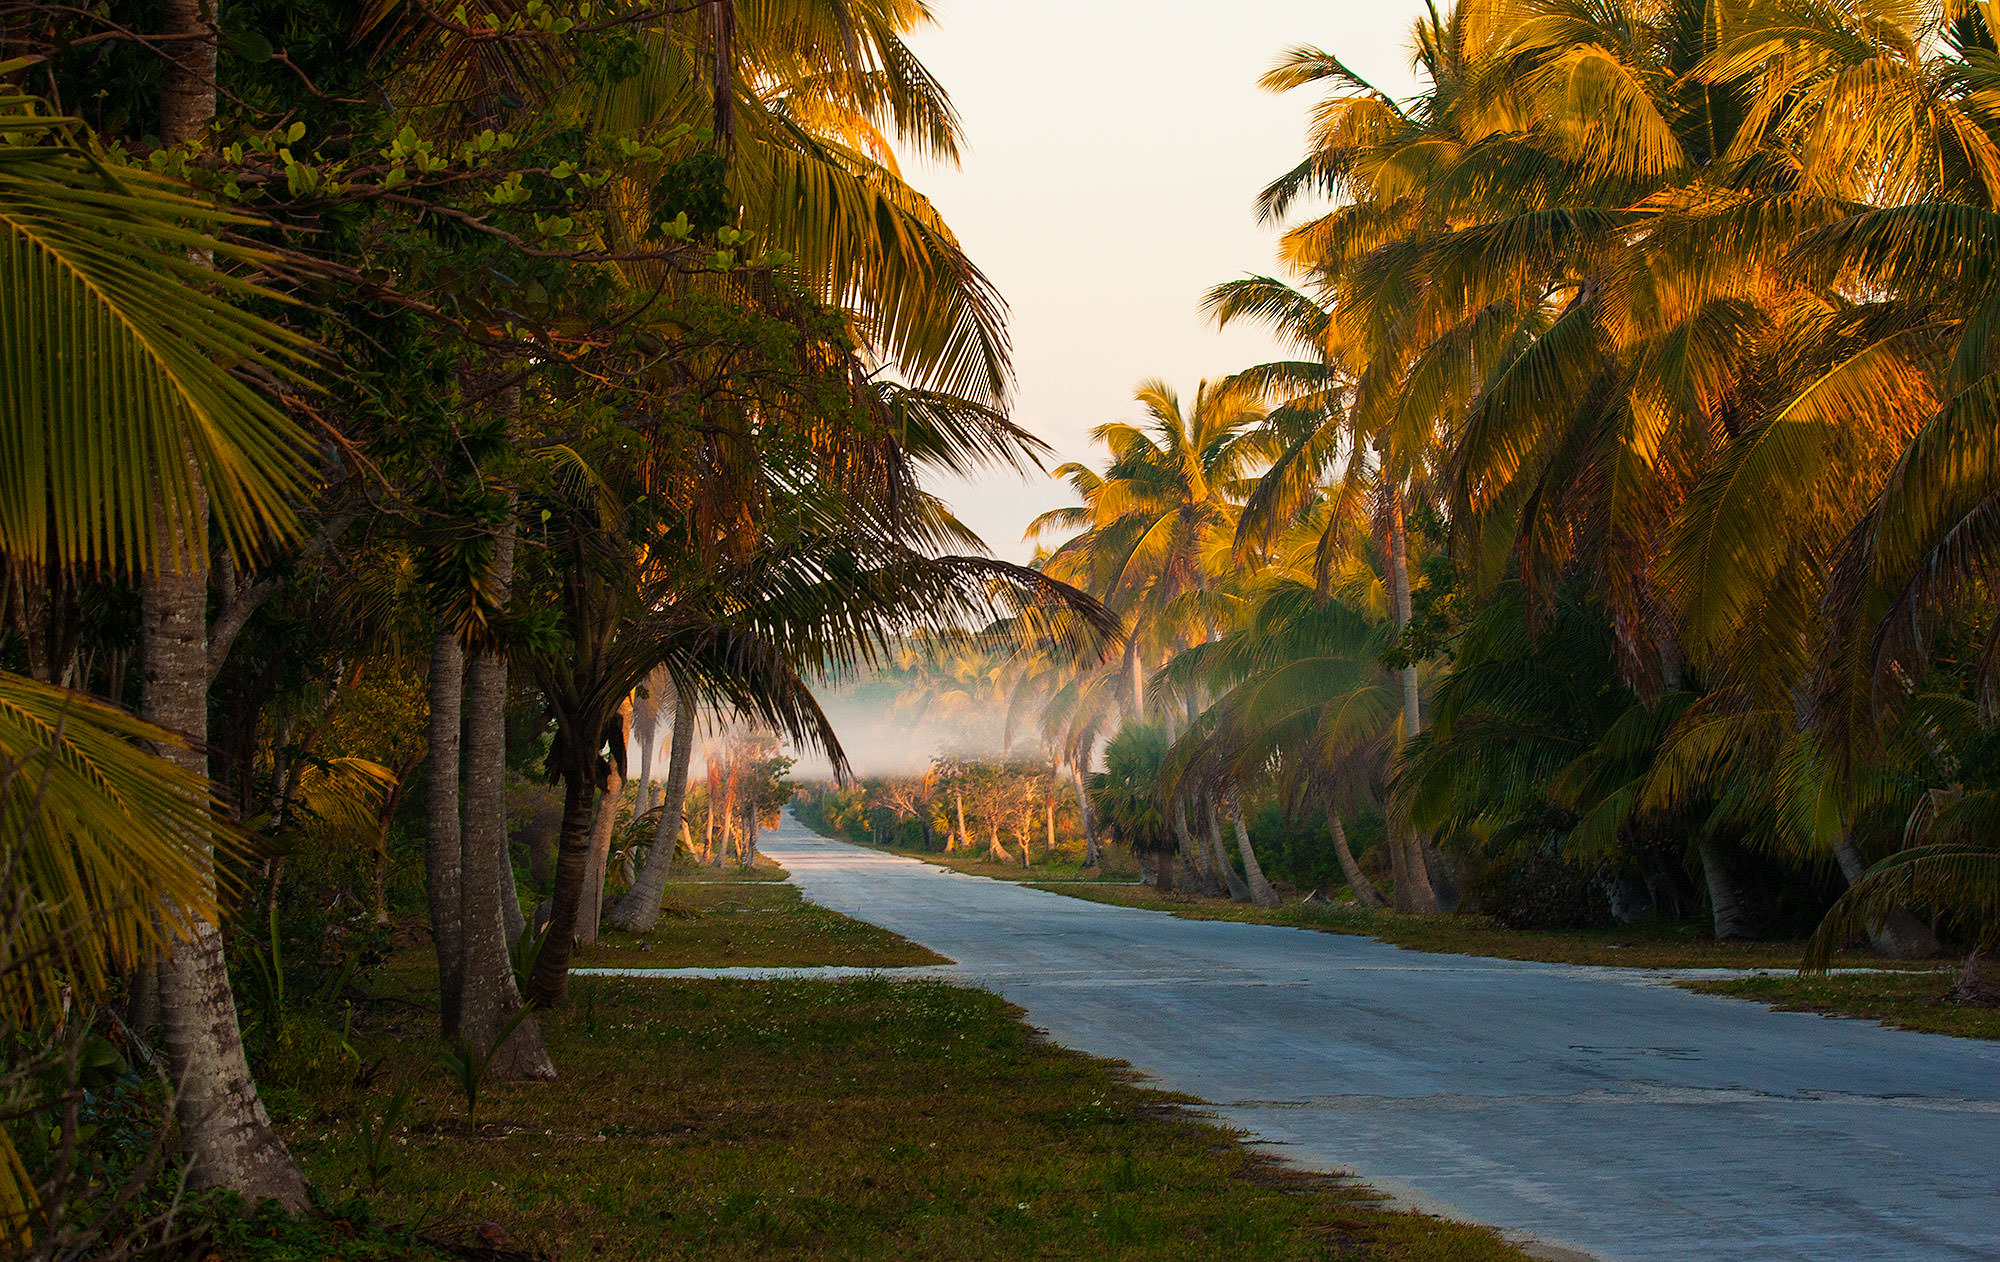 Bahama Palm Shores area